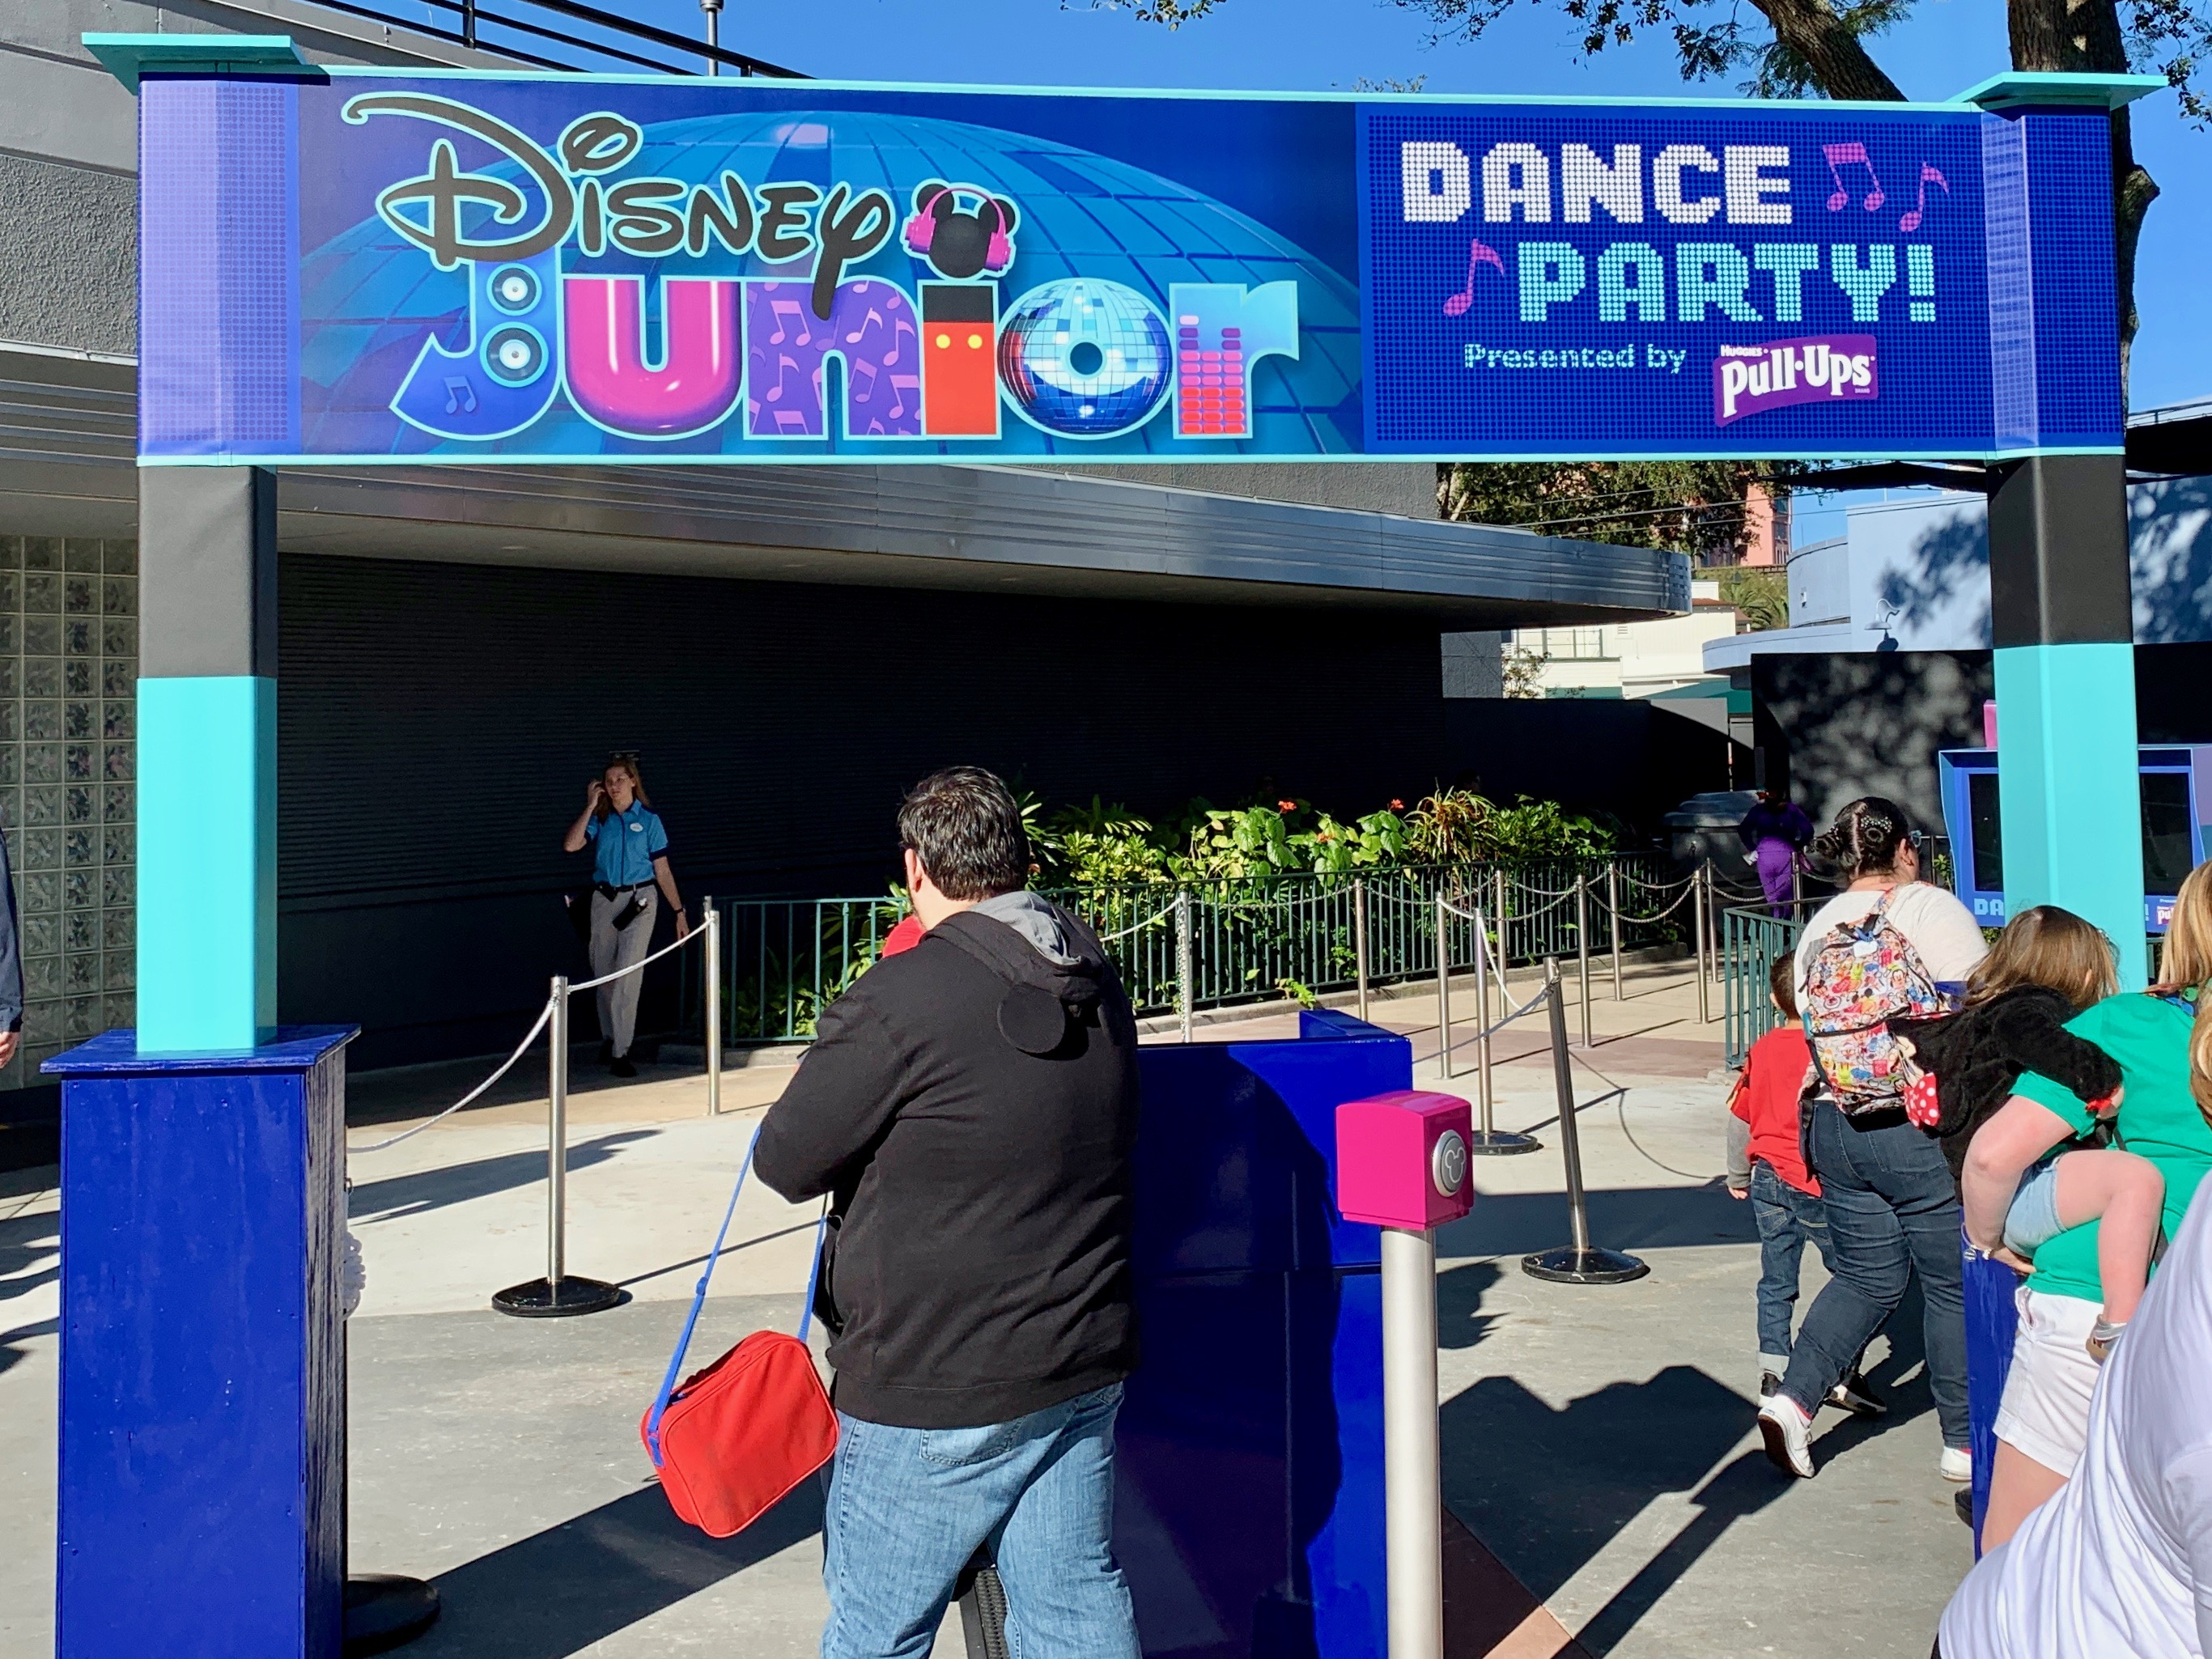 Disney Junior Dance Party begins today at Disney's Hollywood Studios